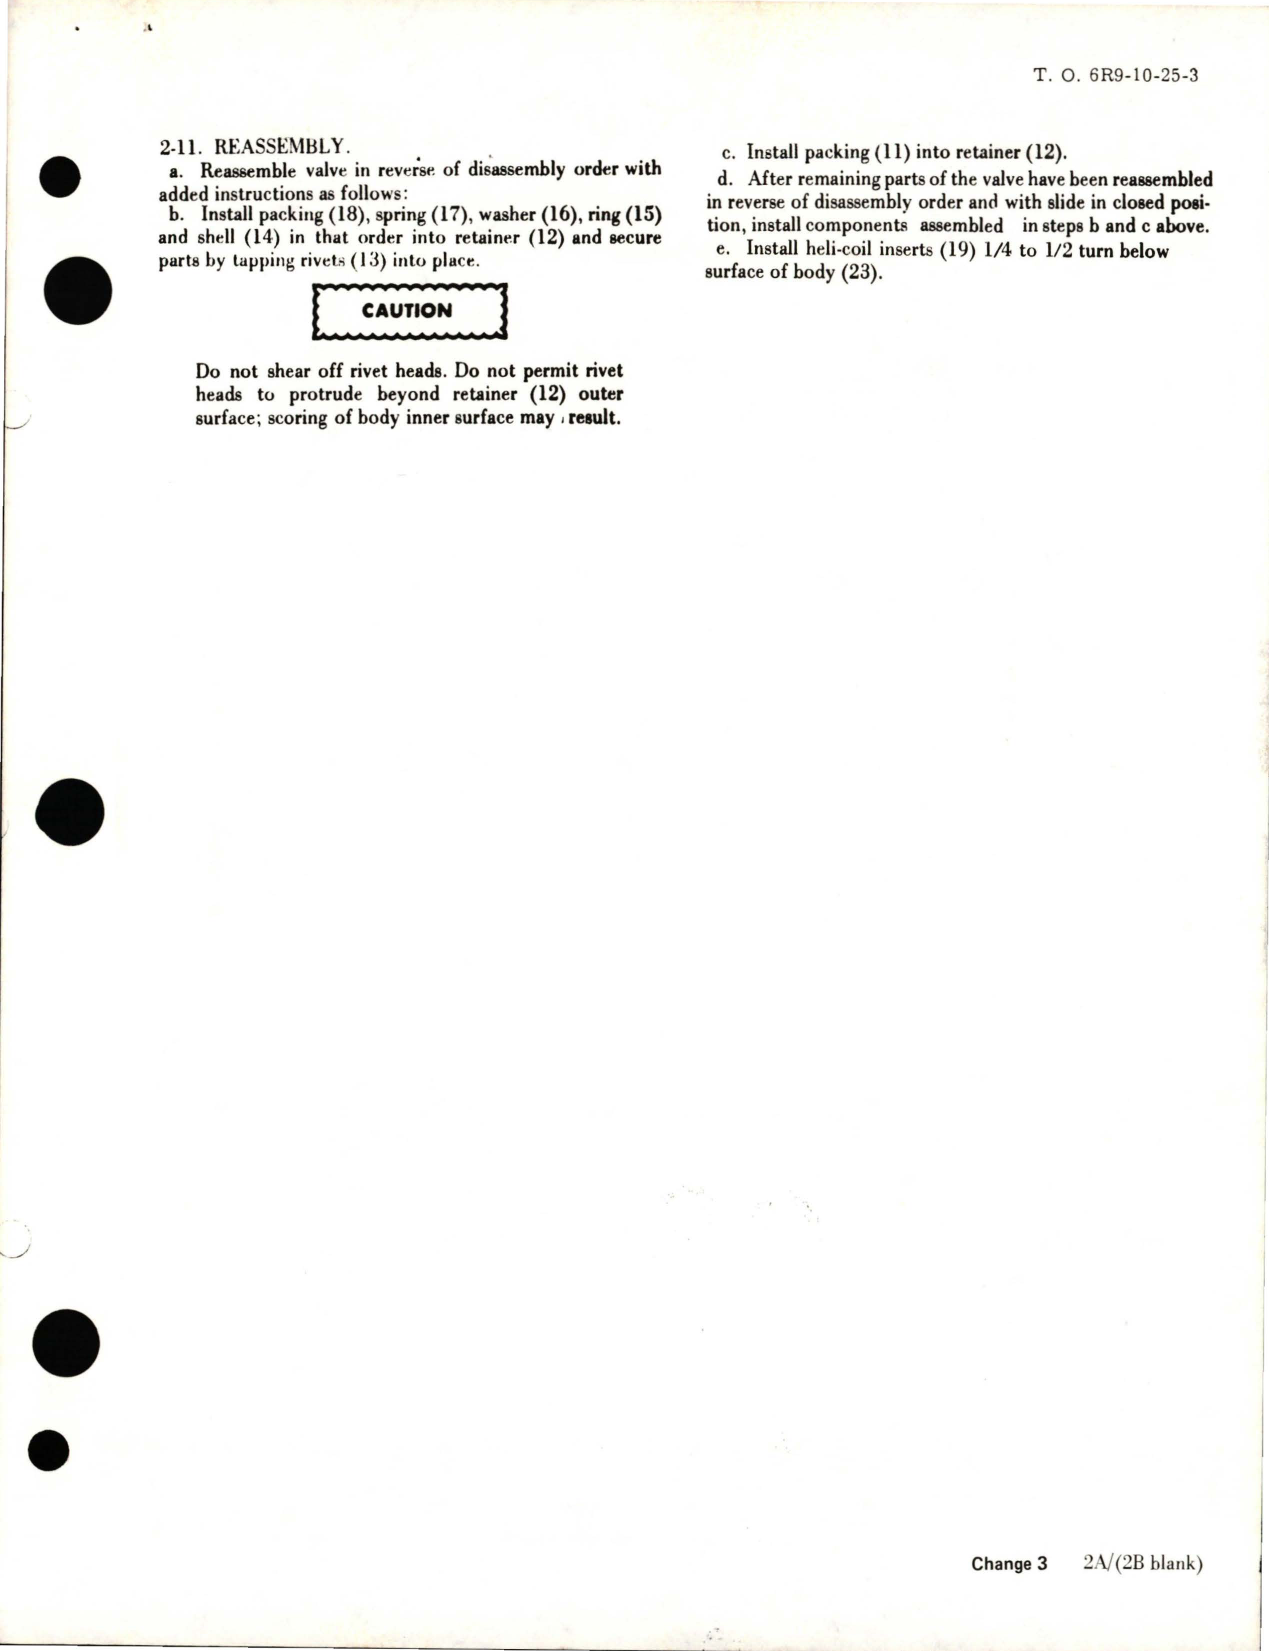 Sample page 7 from AirCorps Library document: Overhaul Instructions for Motor Operated Gate Valve - AV-16B Series - Part AV-16B1139A and Similar Valves